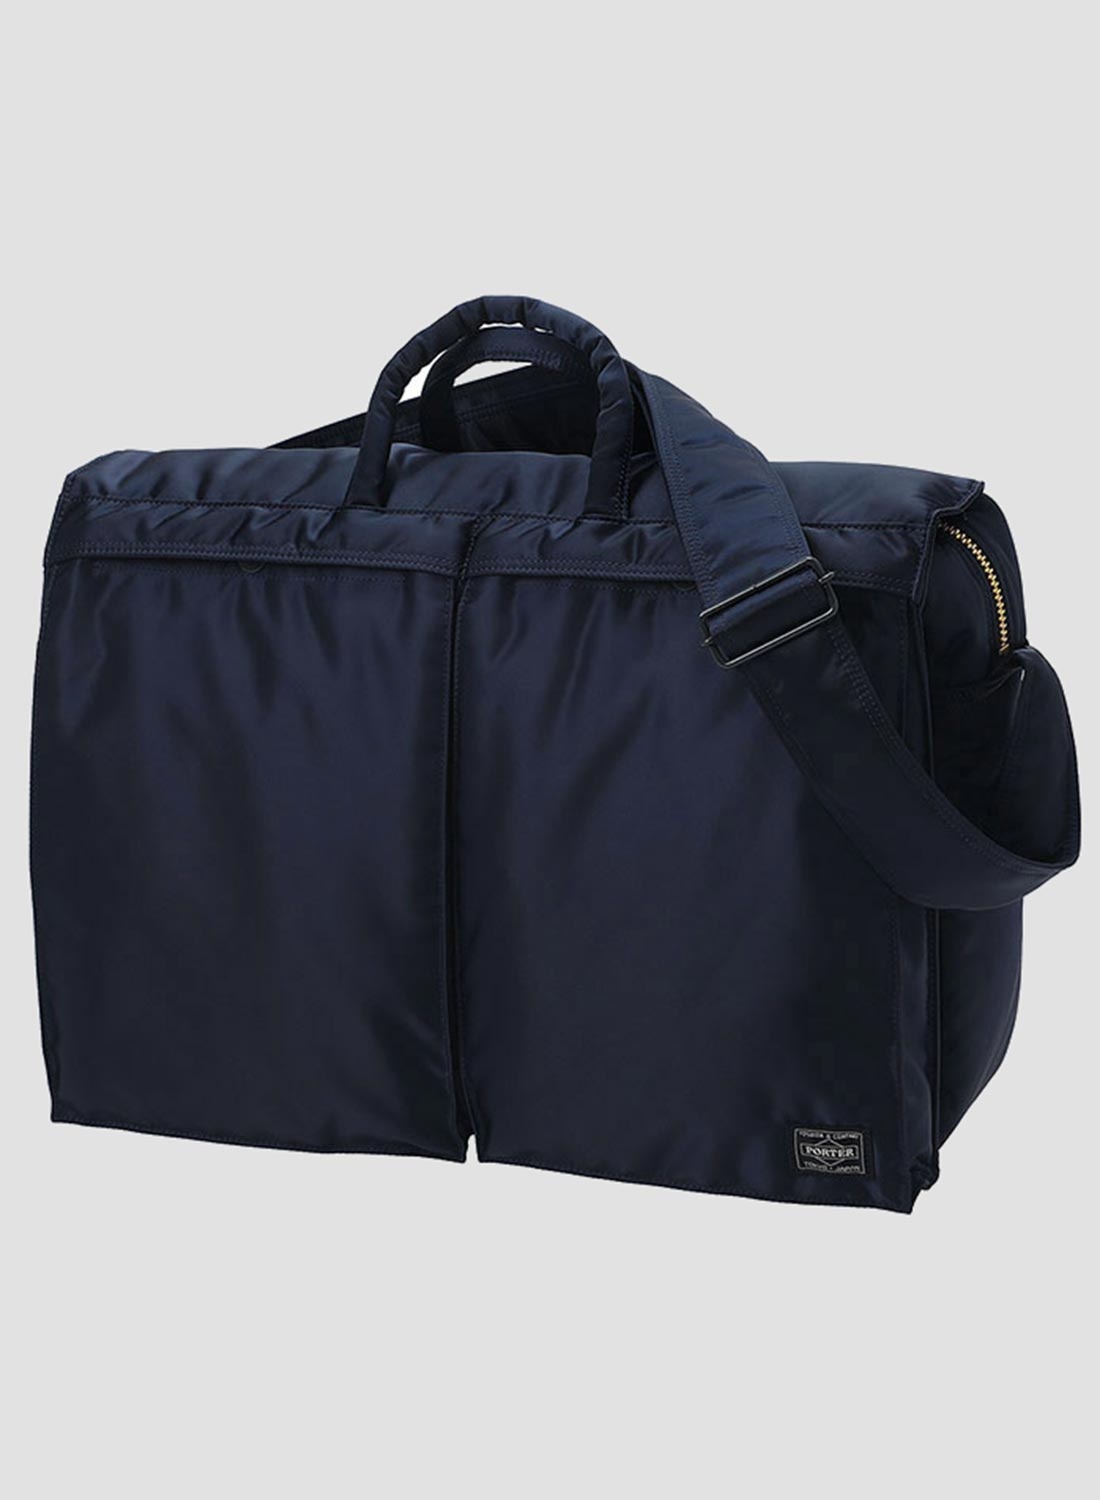 Porter-Yoshida & Co Tanker 2Way Shoulder Bag in Iron Blue - 1